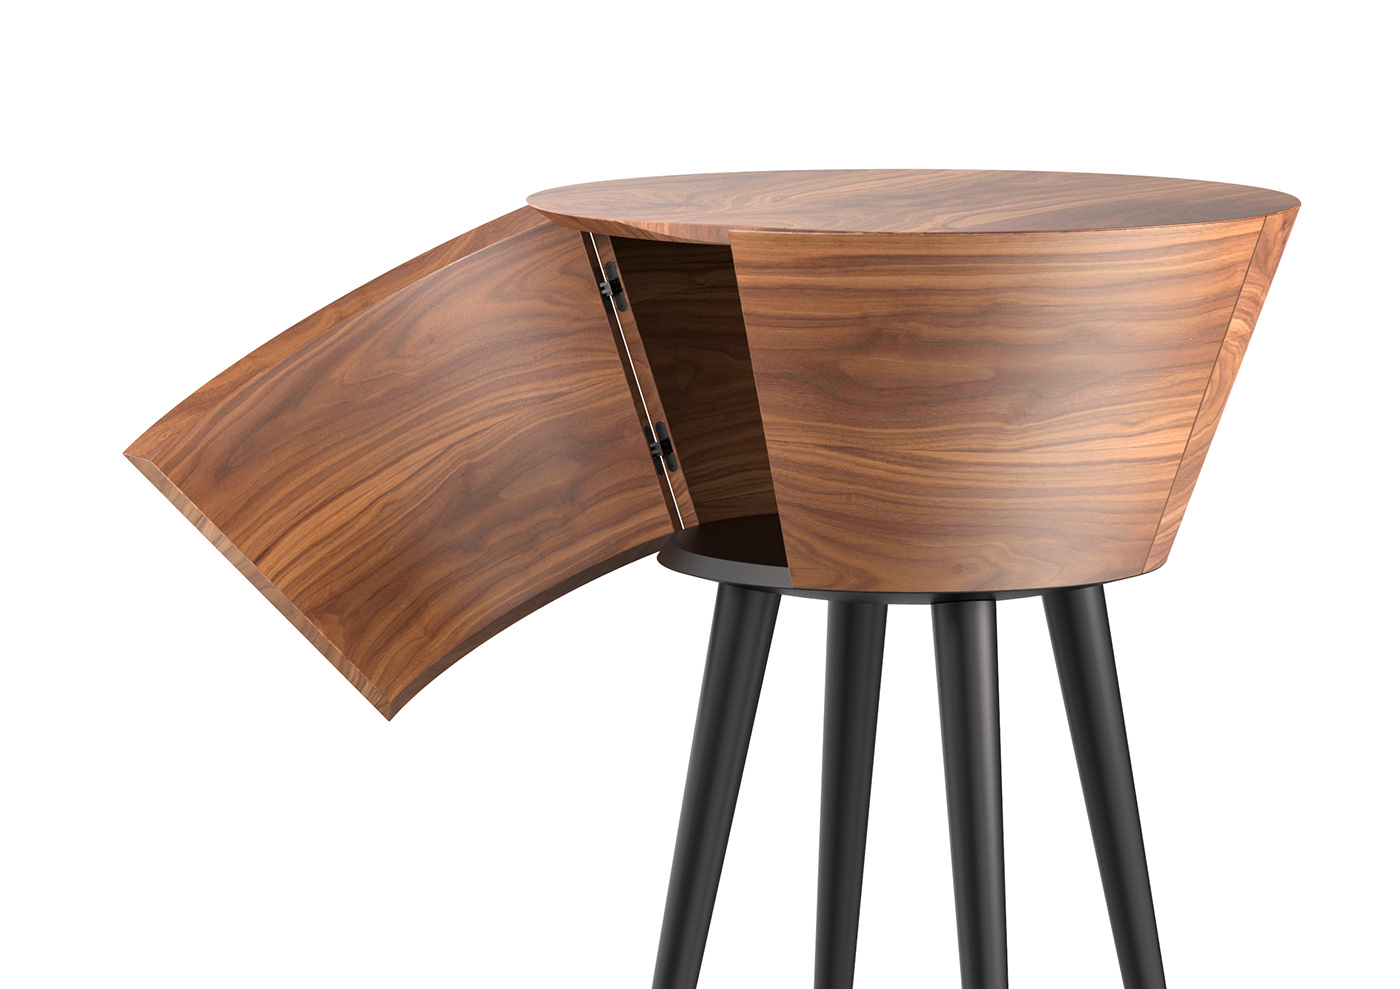 furniture sidetable walnut furnituredesign productdesig industrialdesign concept minimal storing door